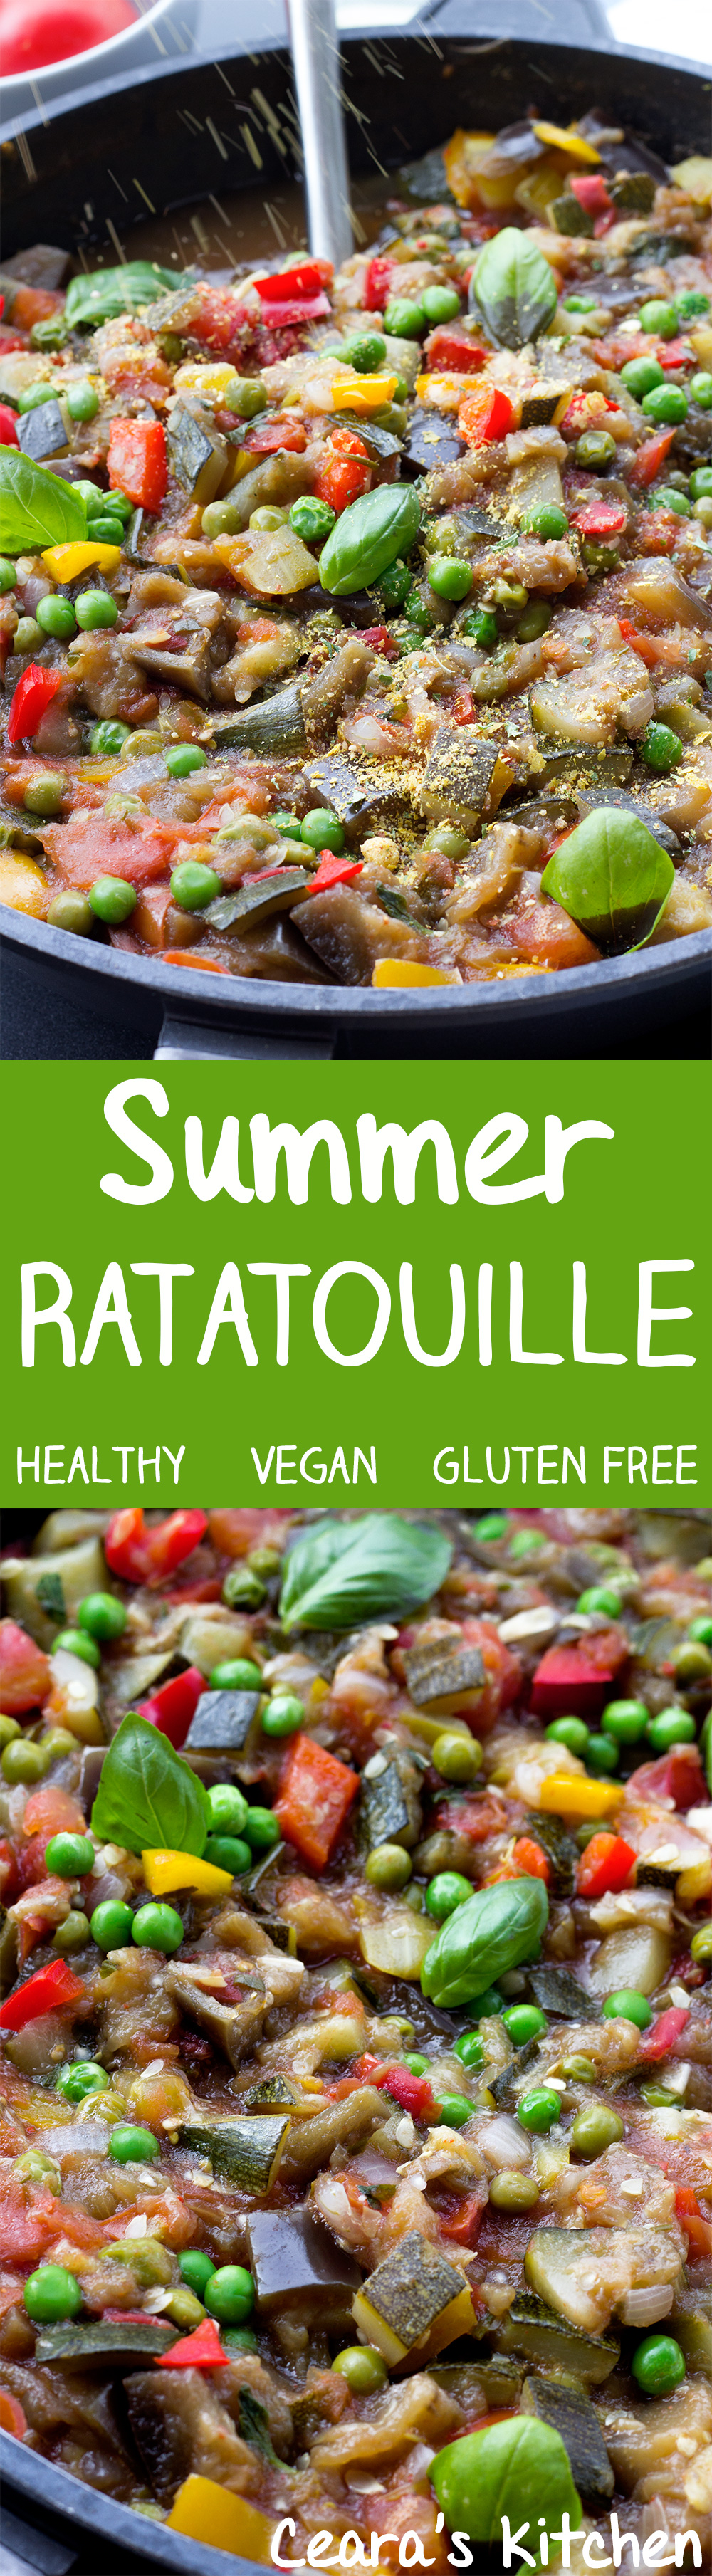 Summer Ratatouille Vegan Healthy Gluten Free  made